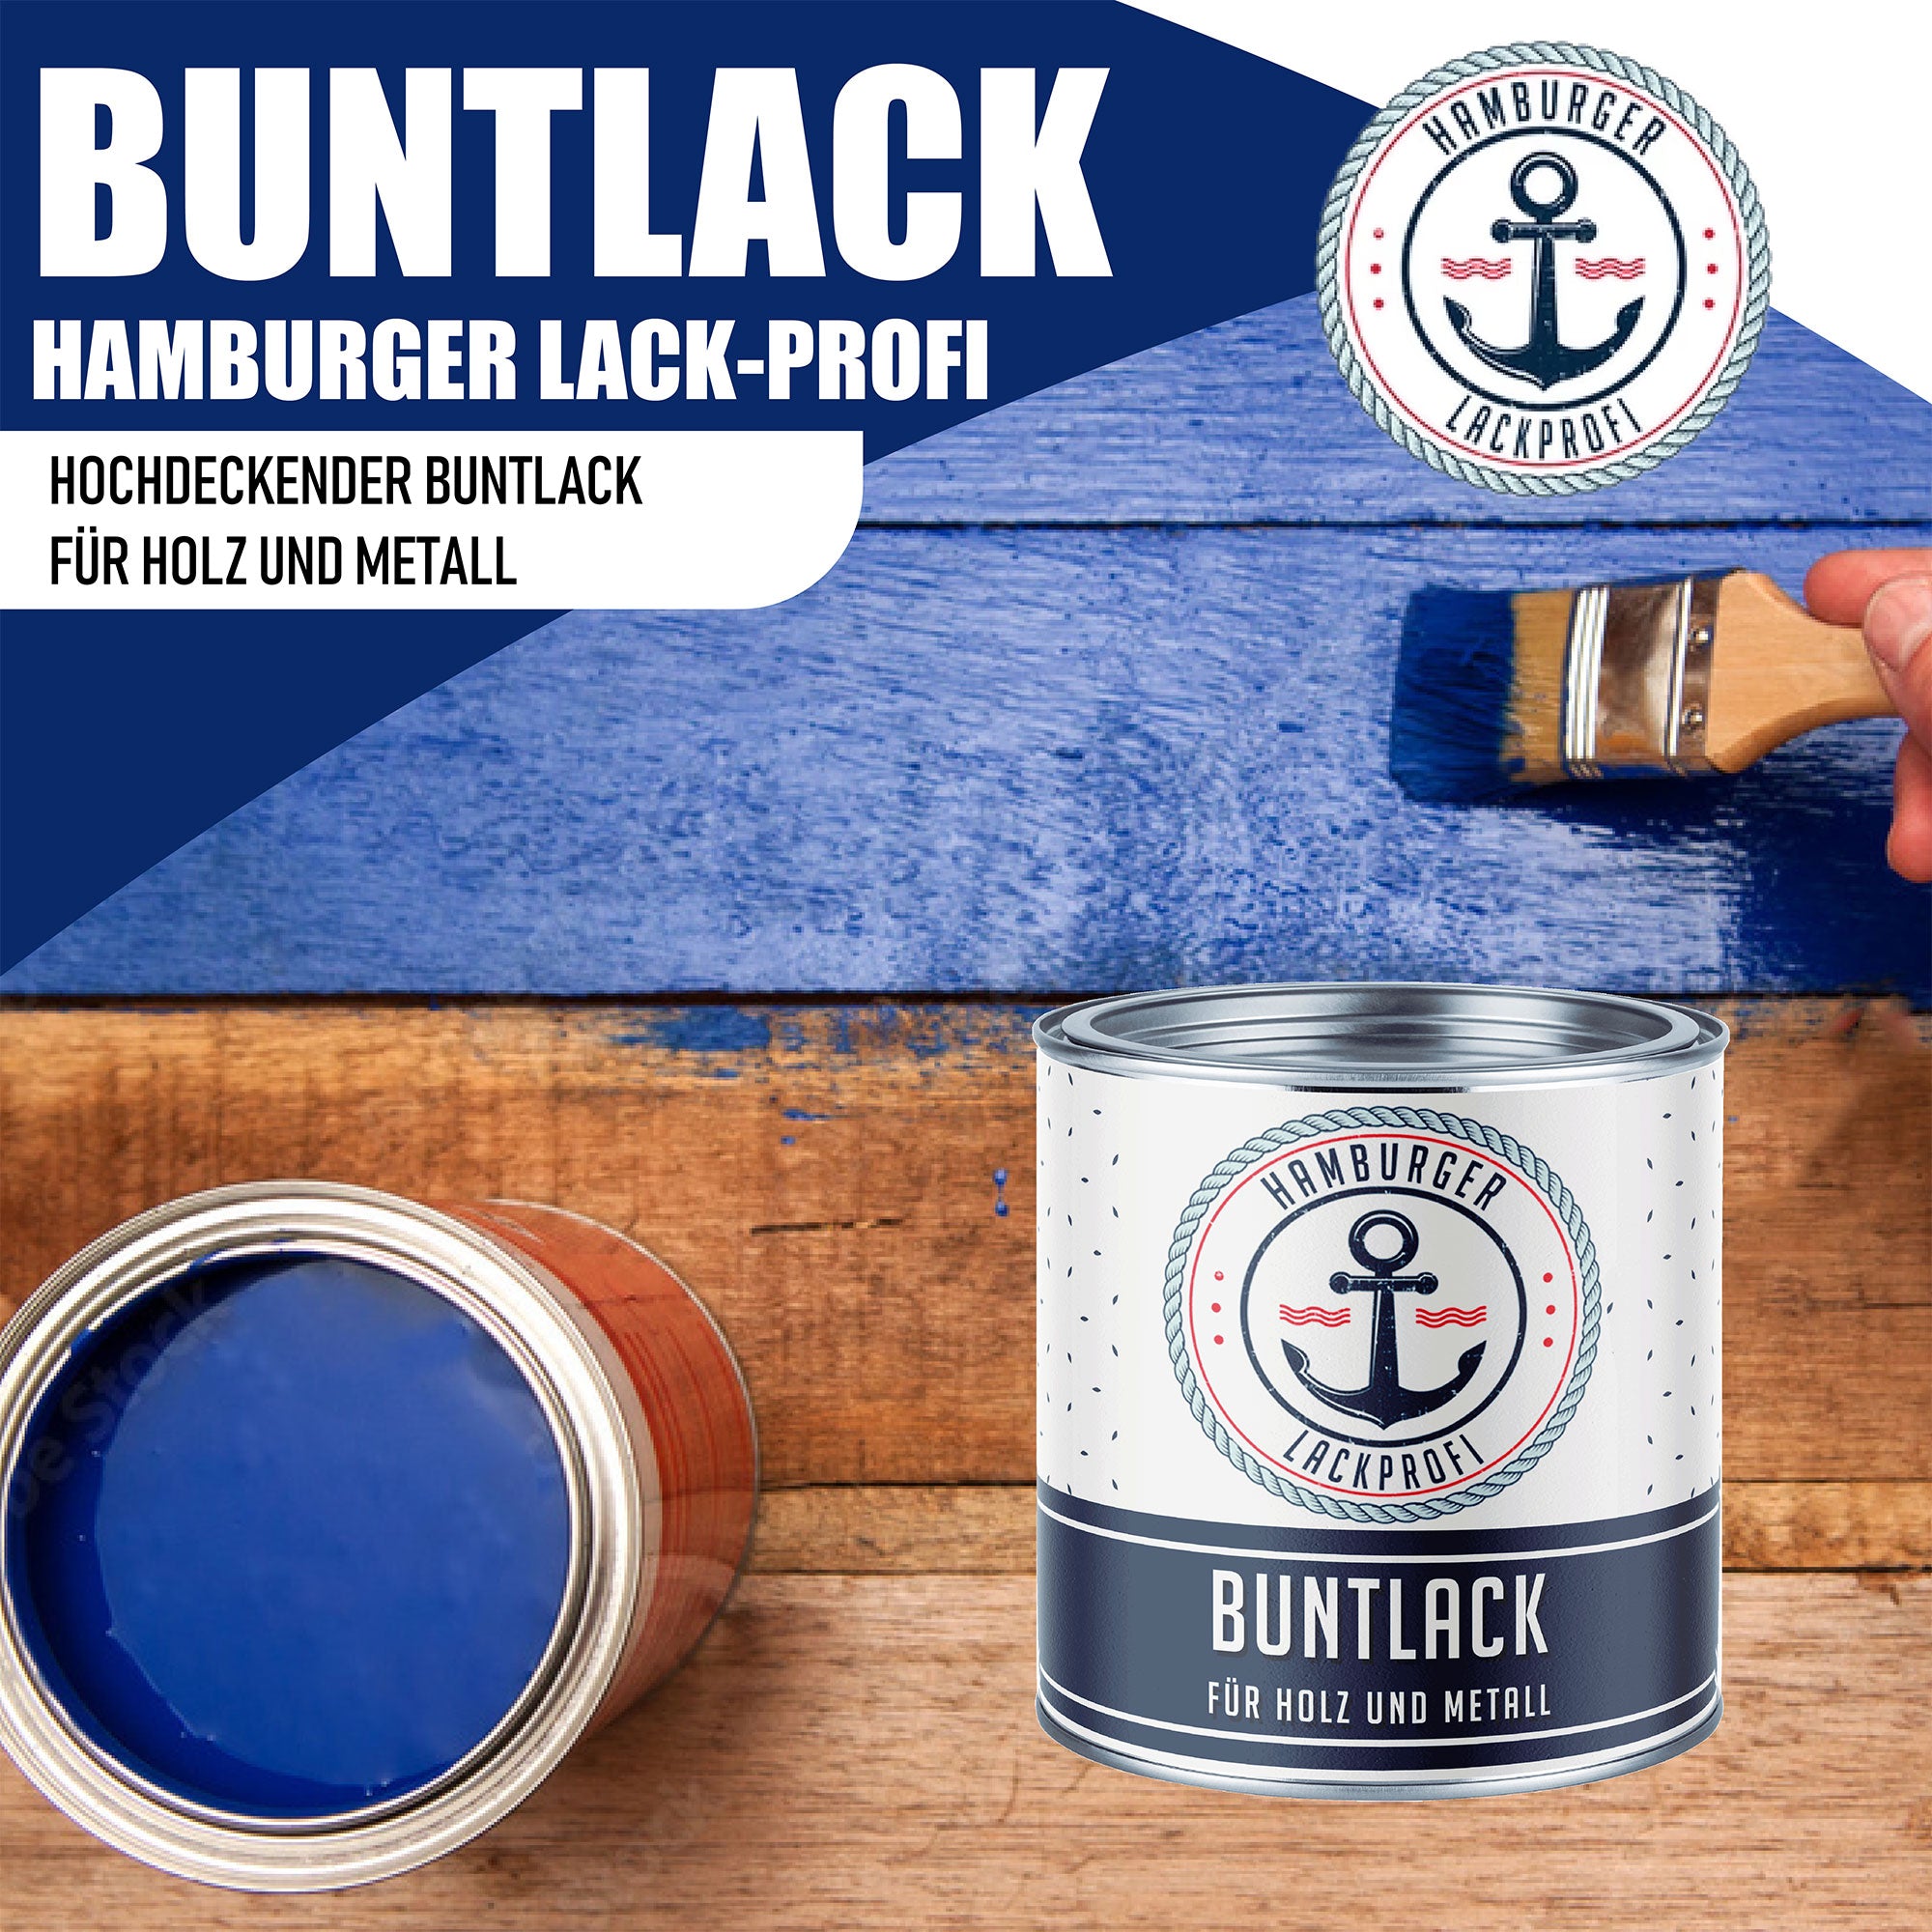 Hamburger Lack-Profi Buntlack Beigebraun RAL 8024 - Robuster Kunstharzlack